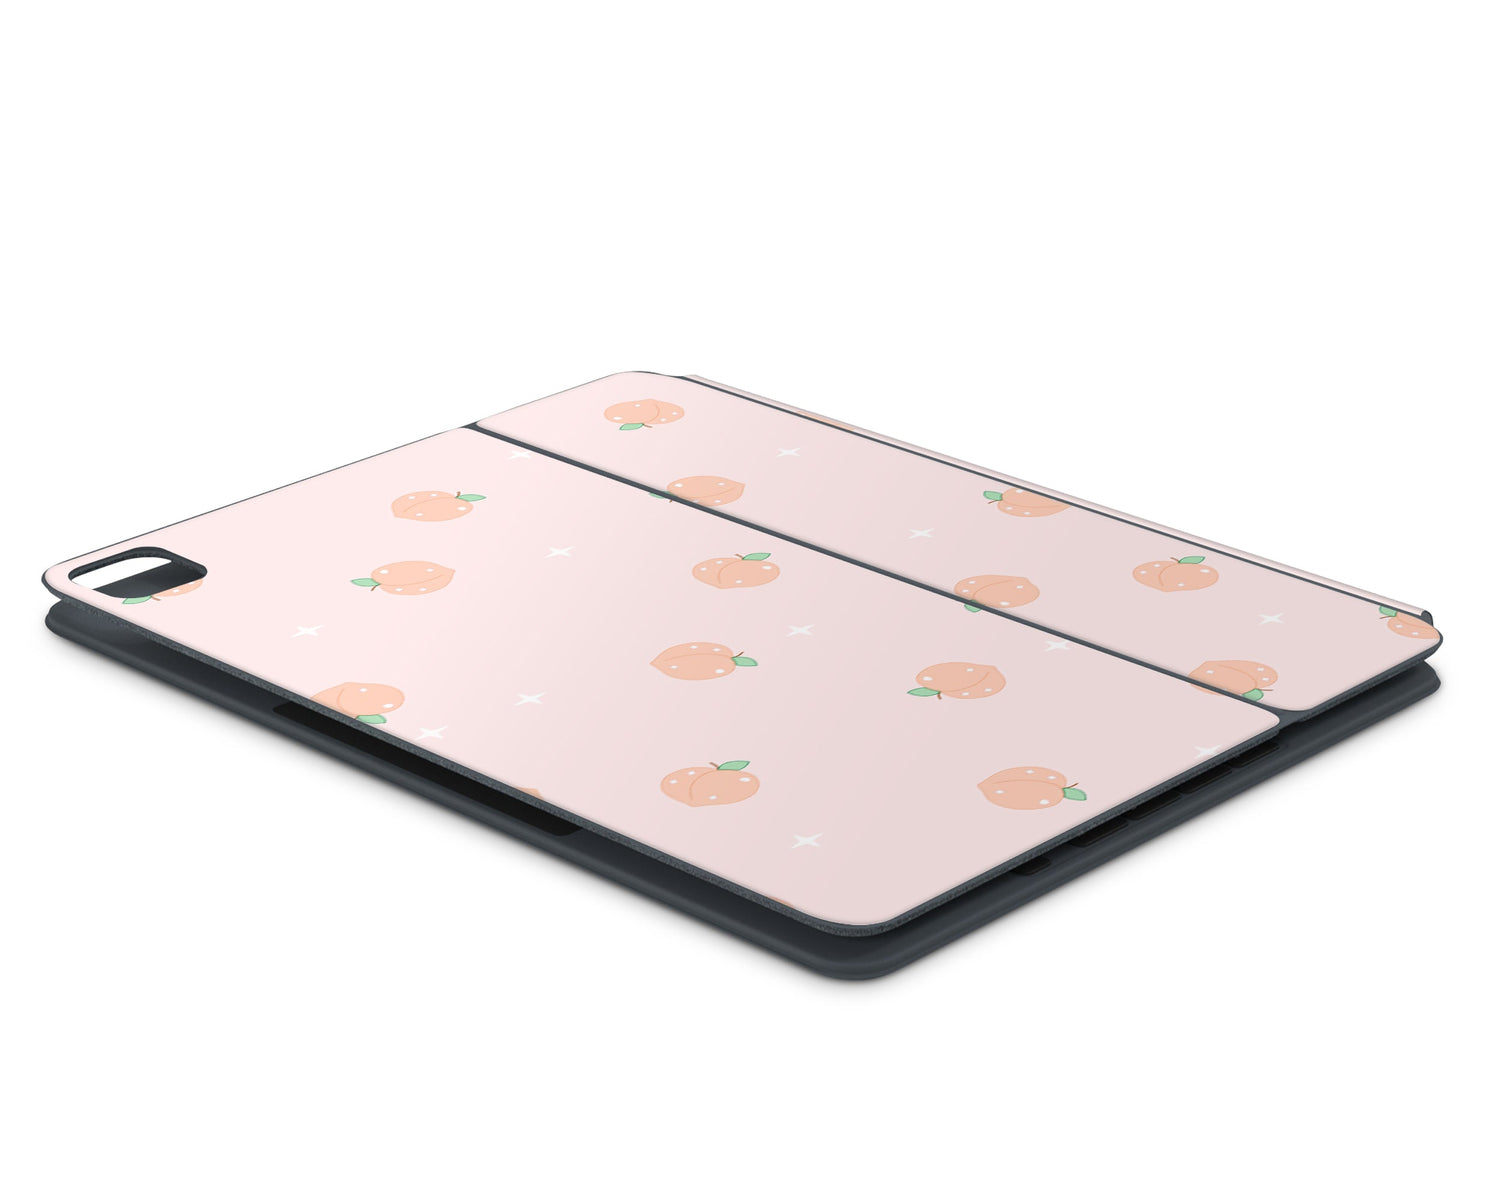 Lux Skins Magic Keyboard Soft Pastel Peaches iPad Pro 11" Skins - Pattern Fruits Skin